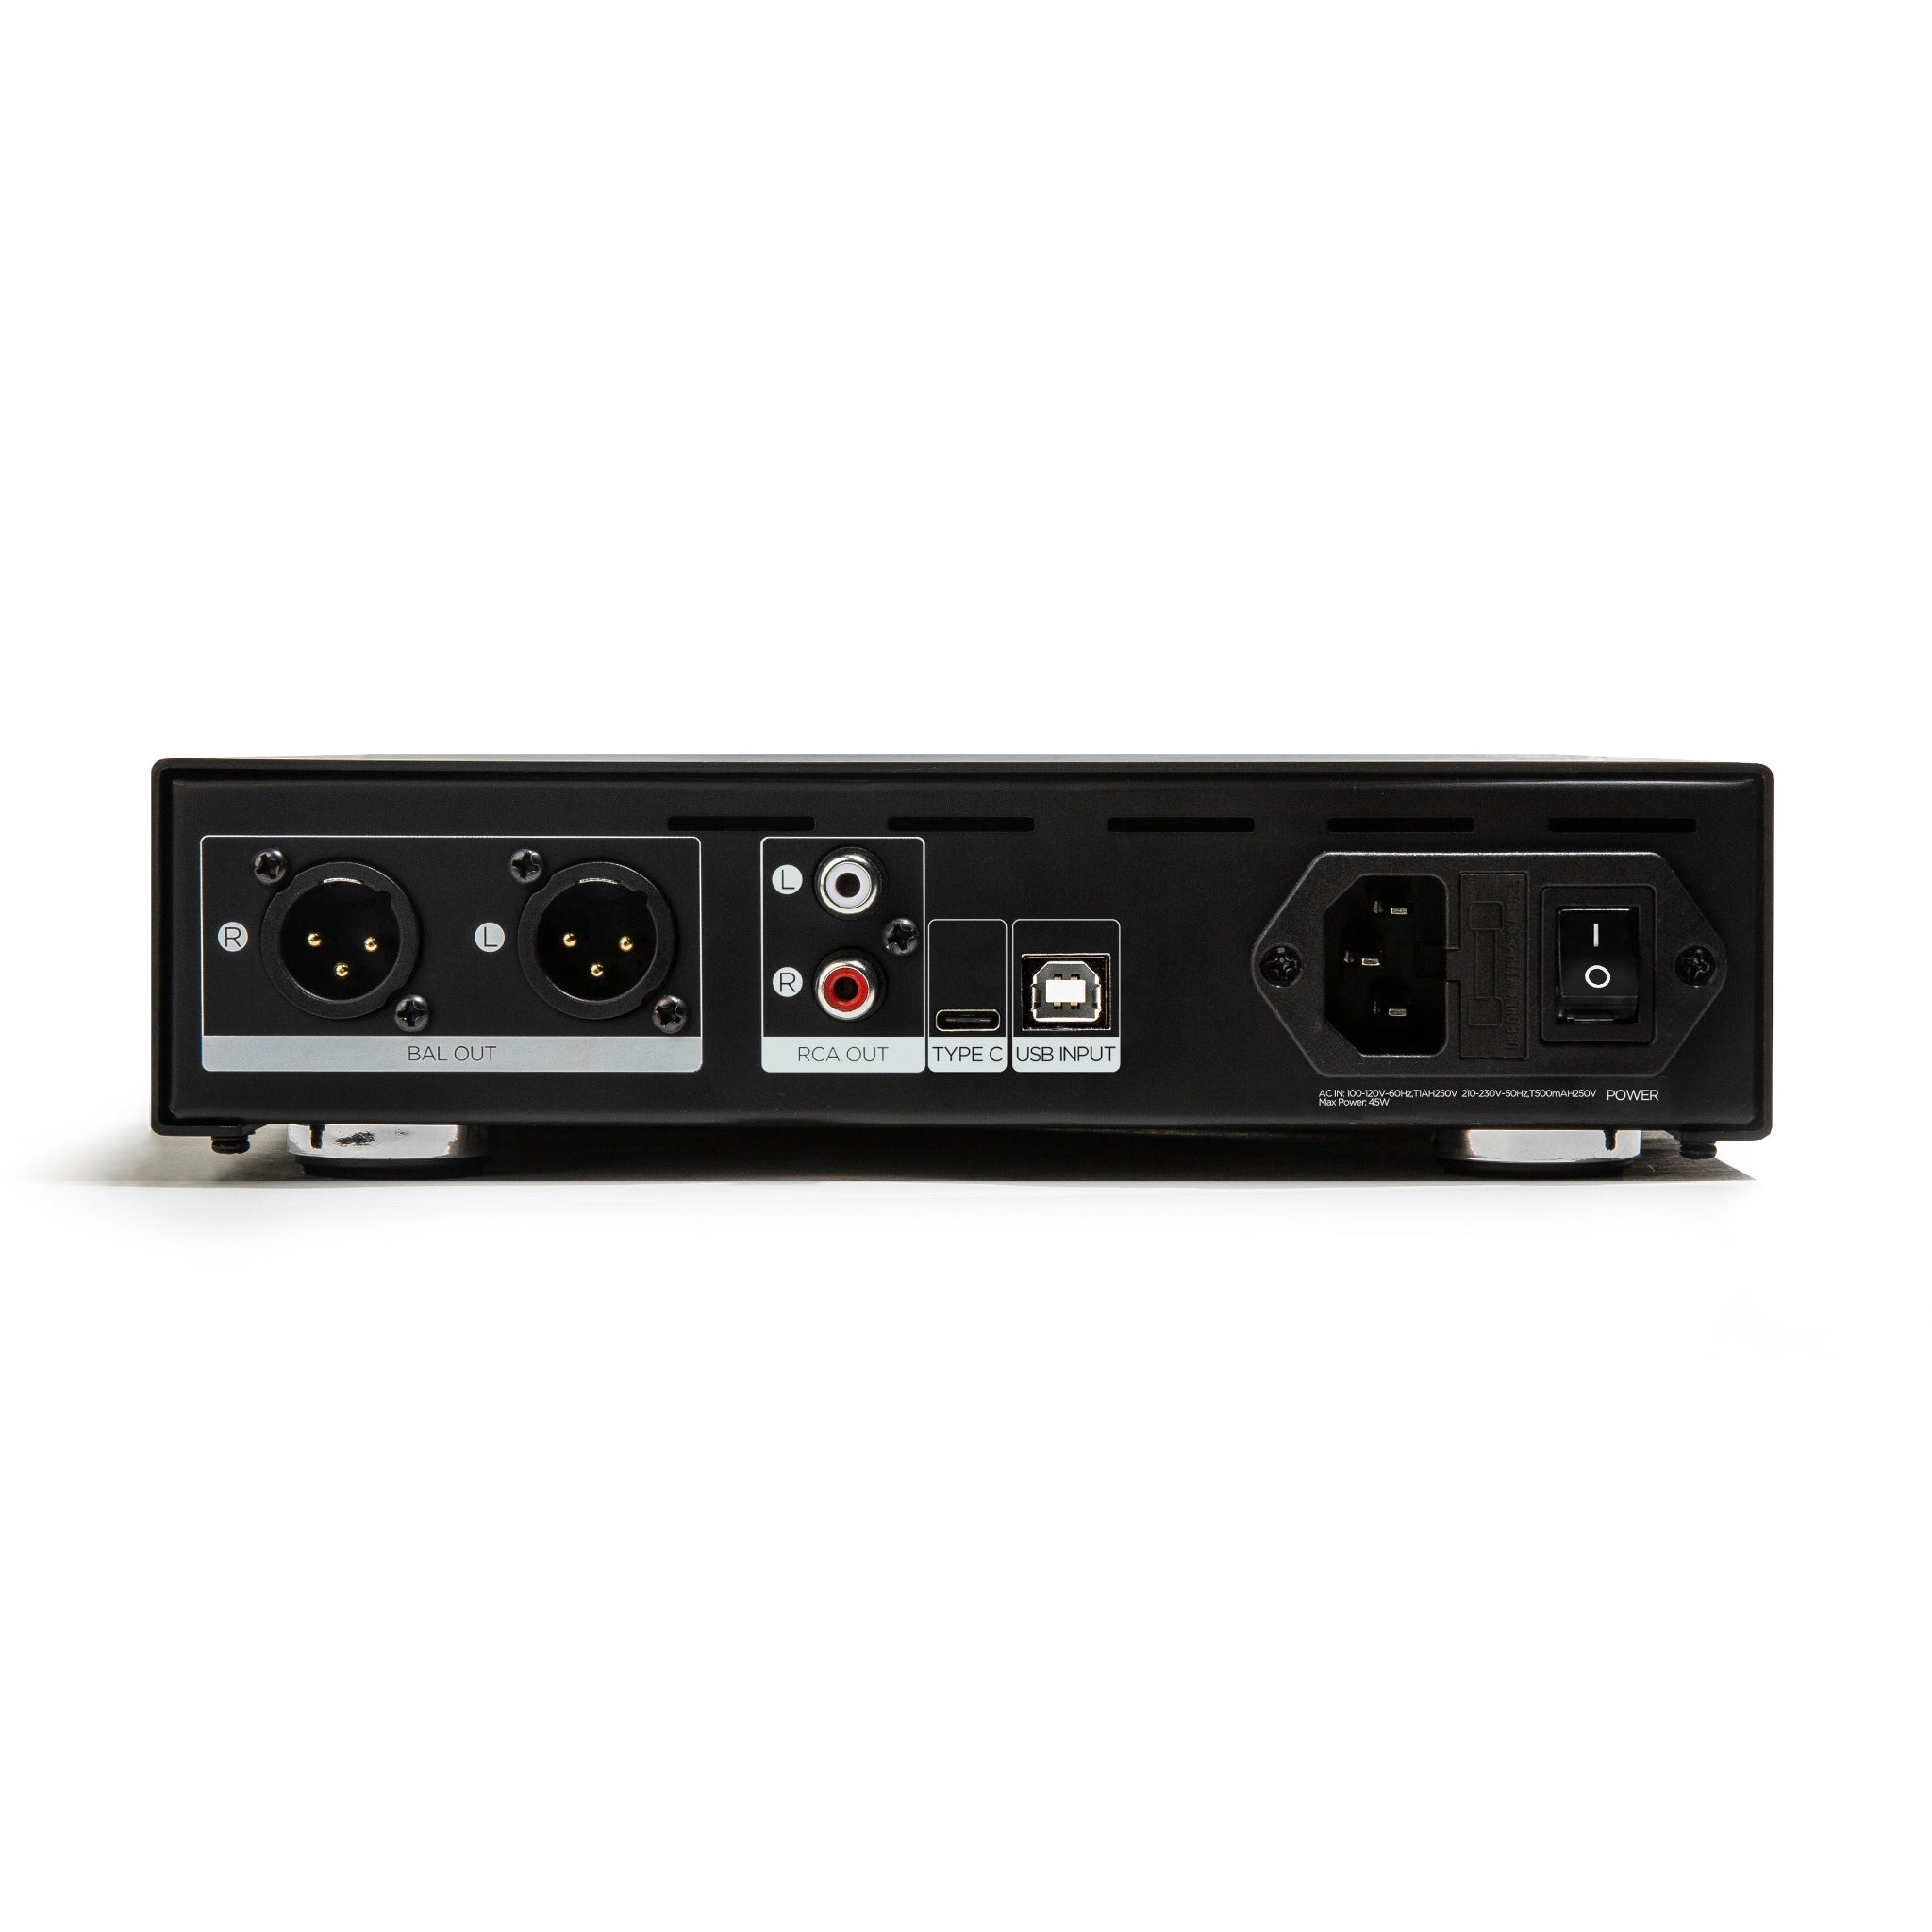 HIFIMAN EF400 Desktop DAC and Amp | Bloom Audio